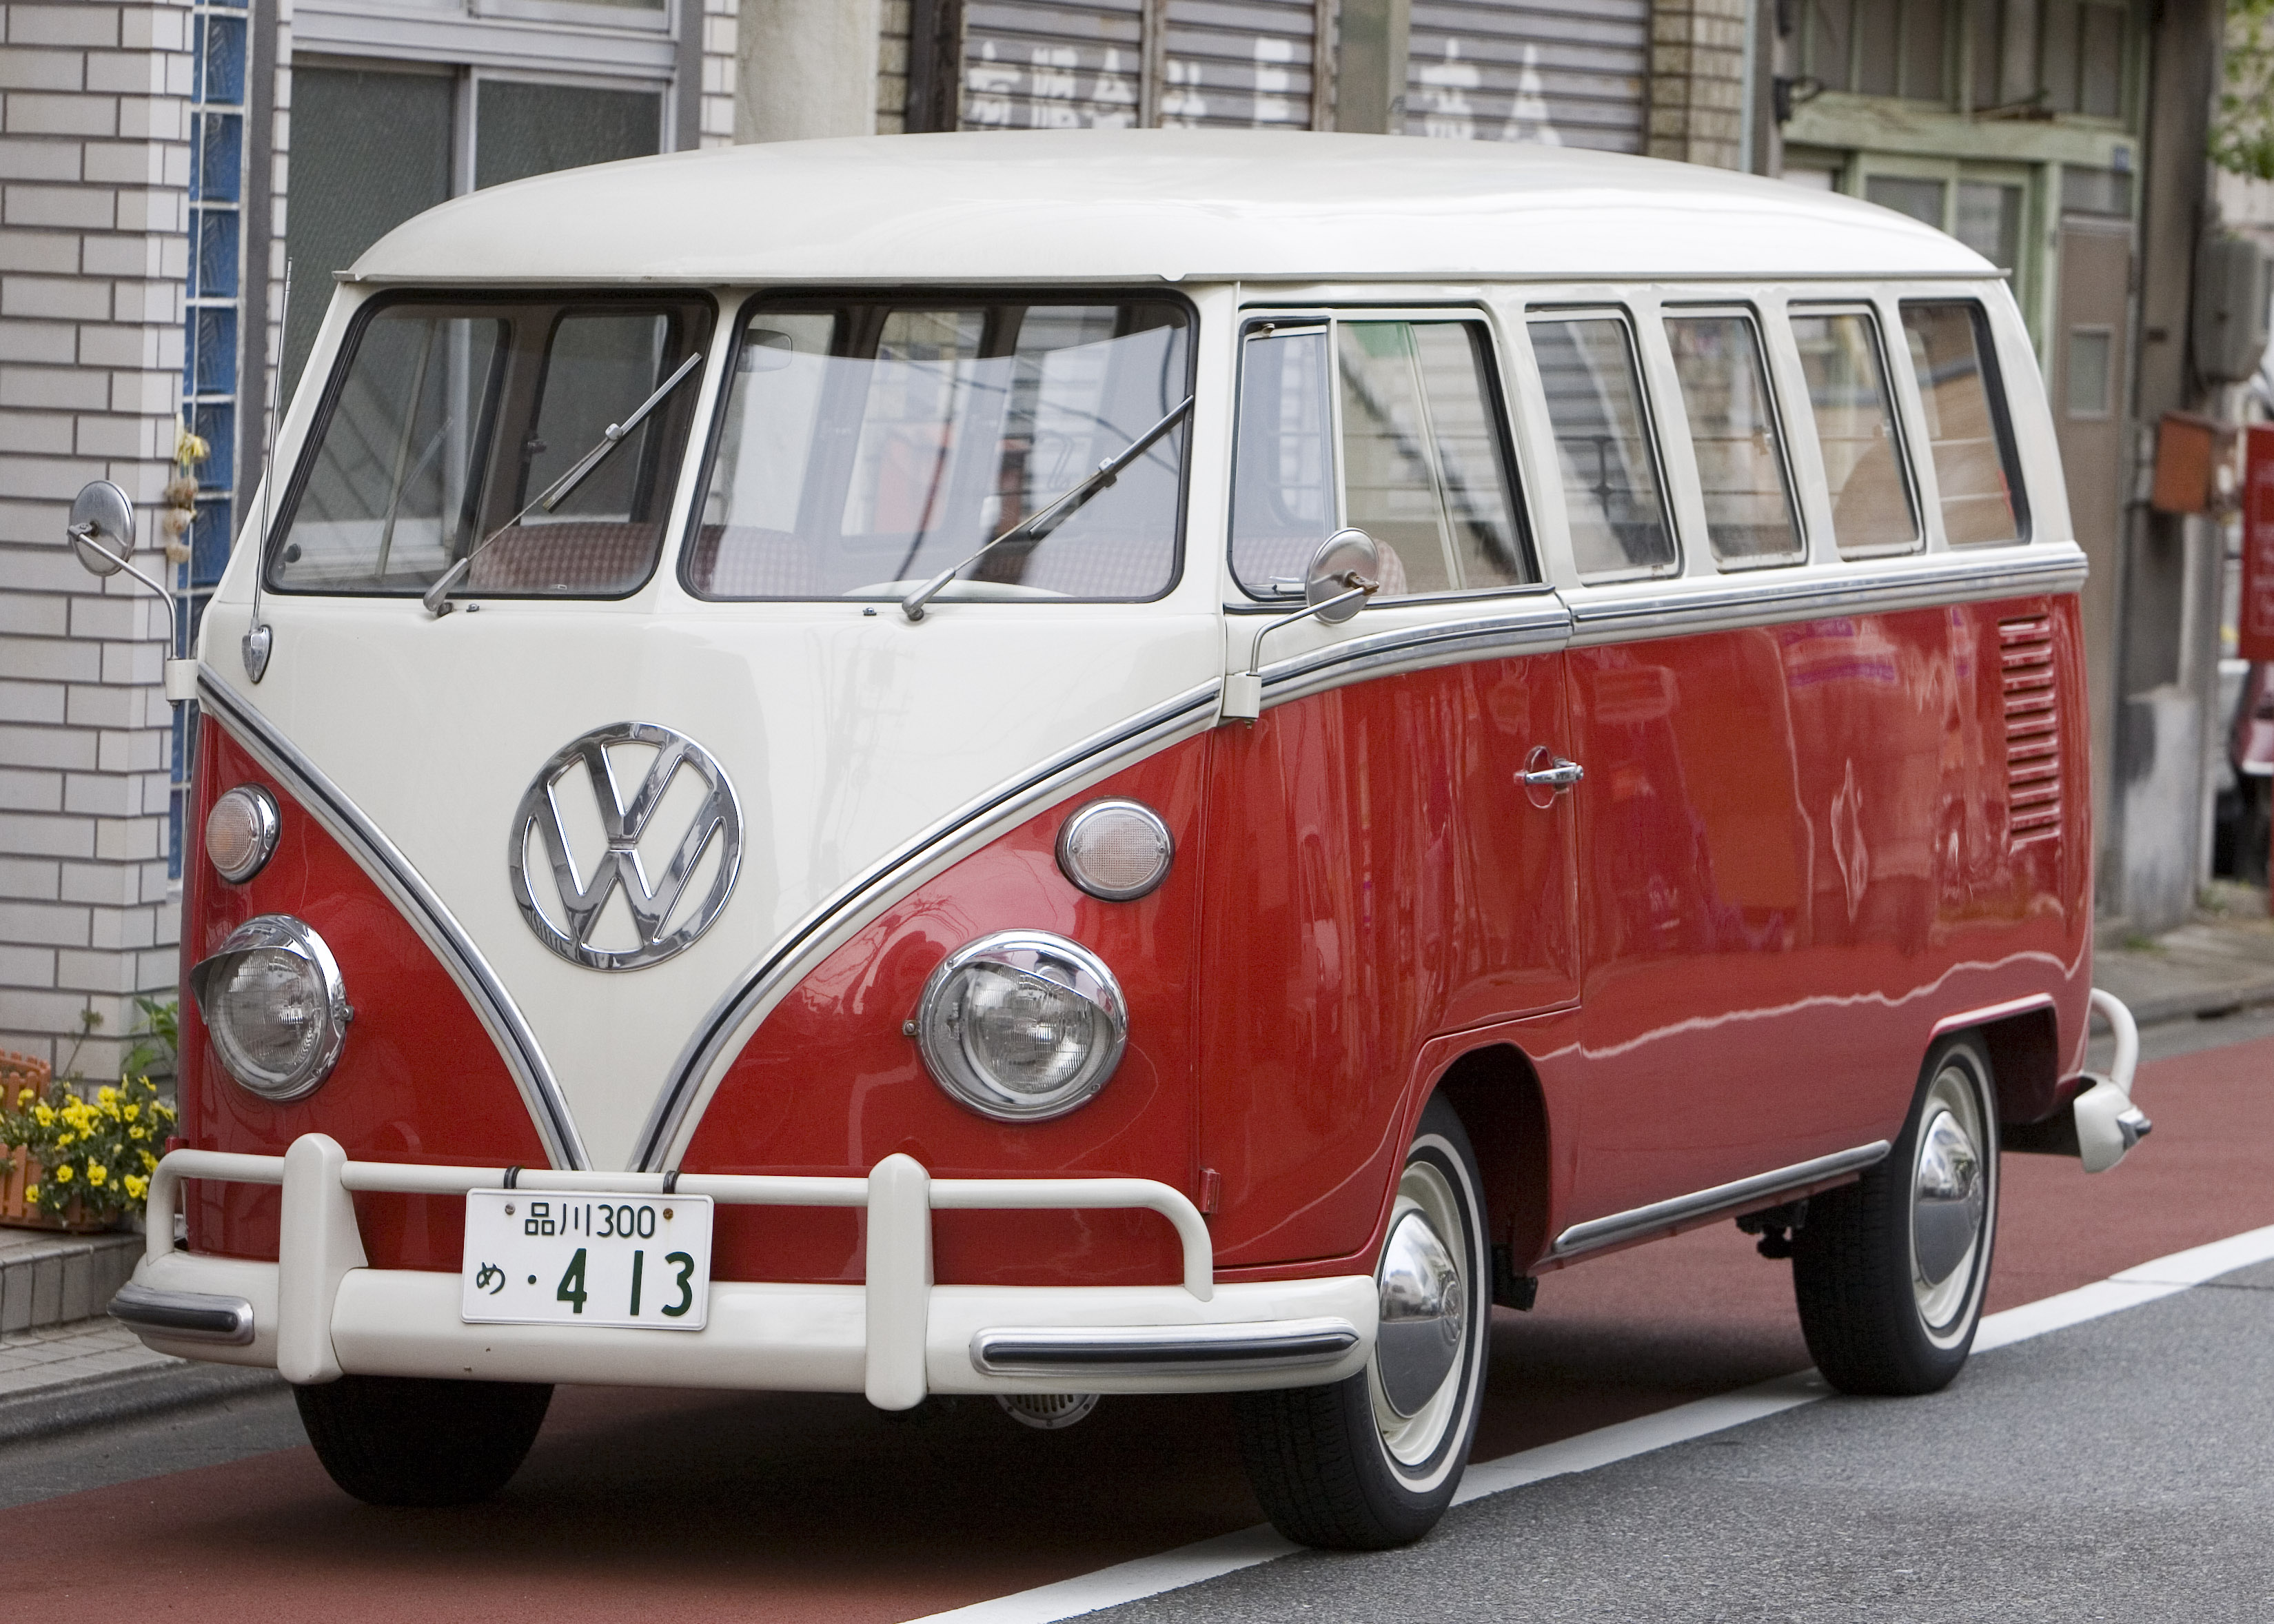 Volkswagen T1 - specs, photos, videos and more on TopWorldAuto